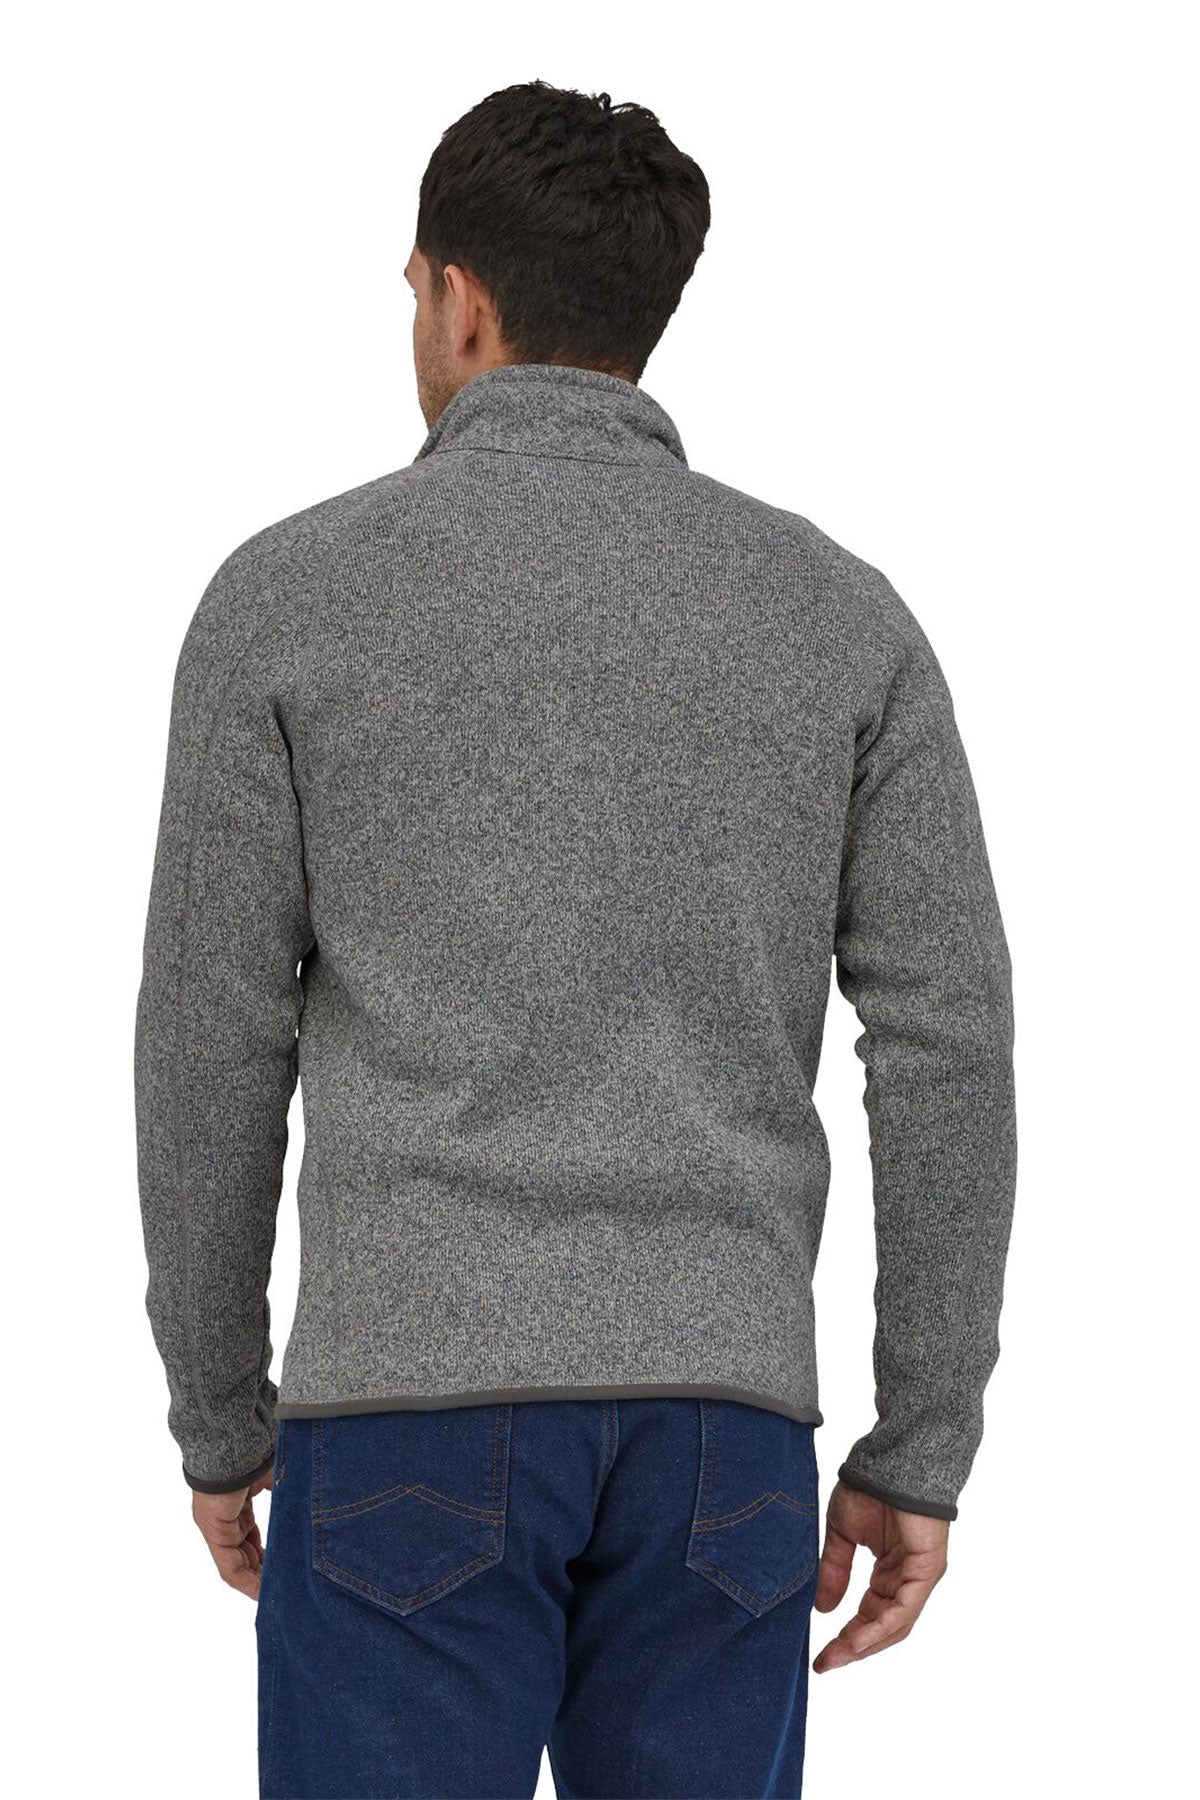 Patagonia Mens Better Sweater Custom Fleece Jackets, Stonewash